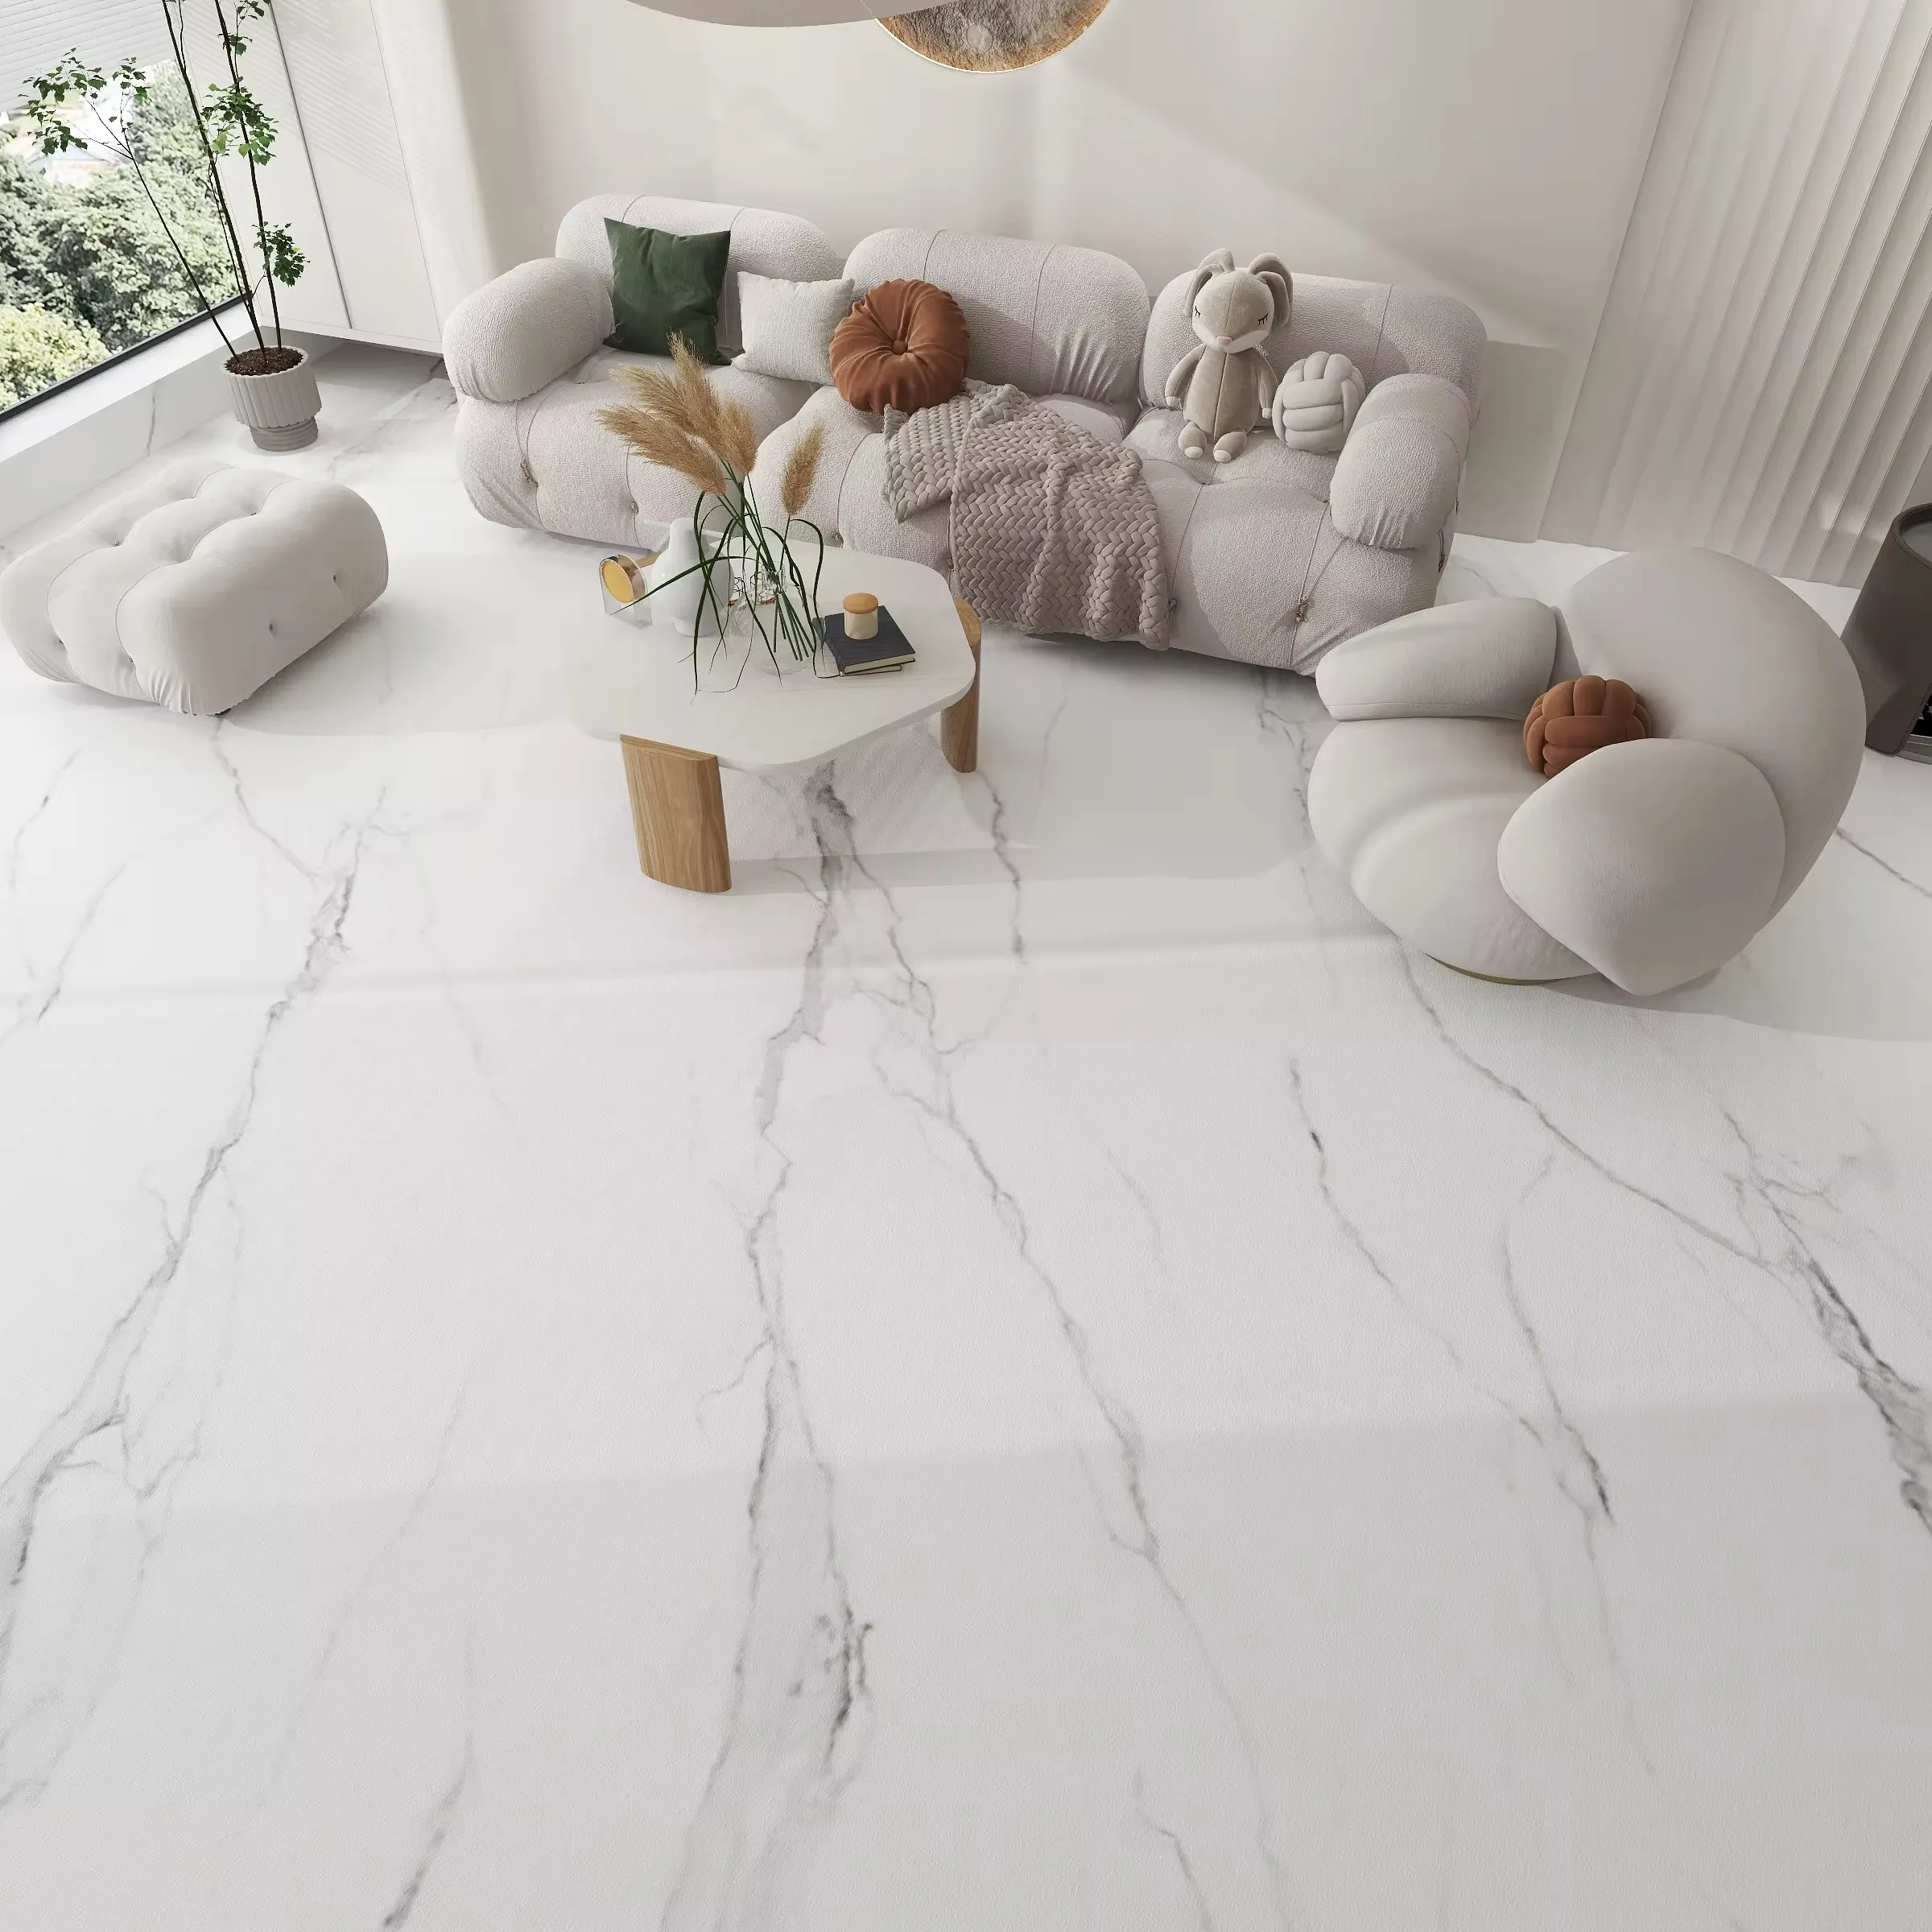 Azulejos de porcelana polida vitrificados de piso de cerâmica de mármore para sala de estar